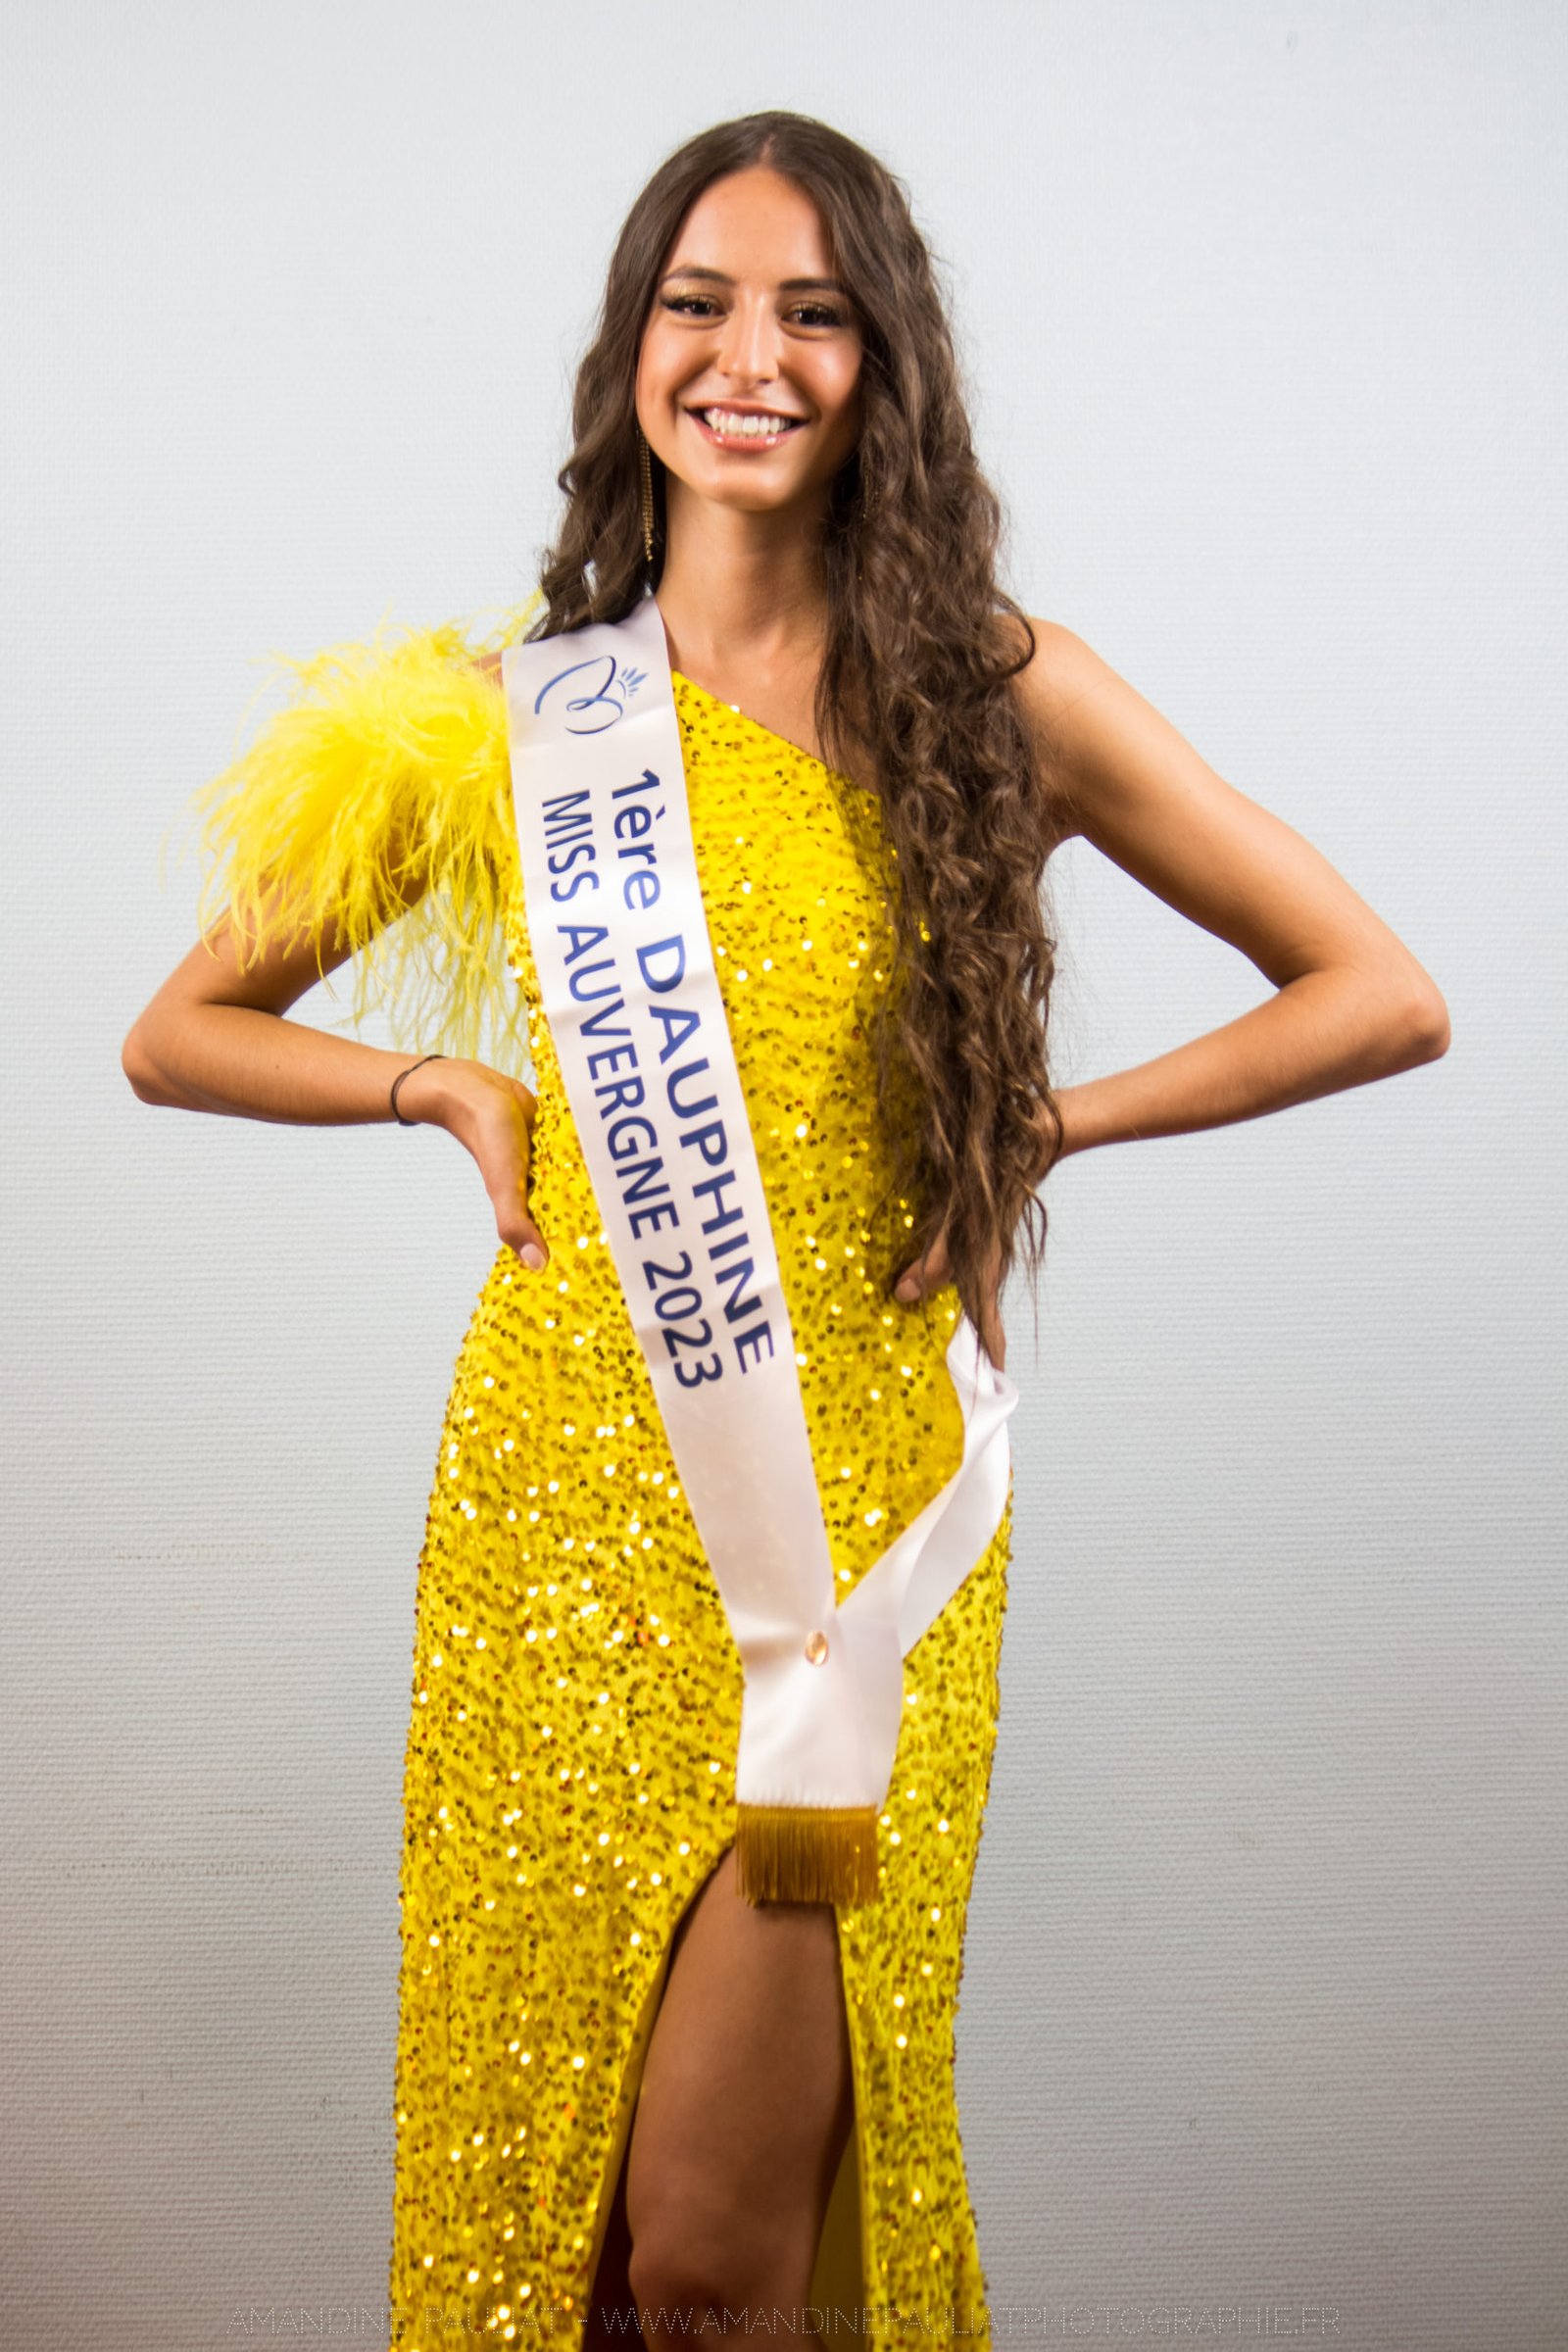 Perrine Terpereau Miss Auvergne 2023